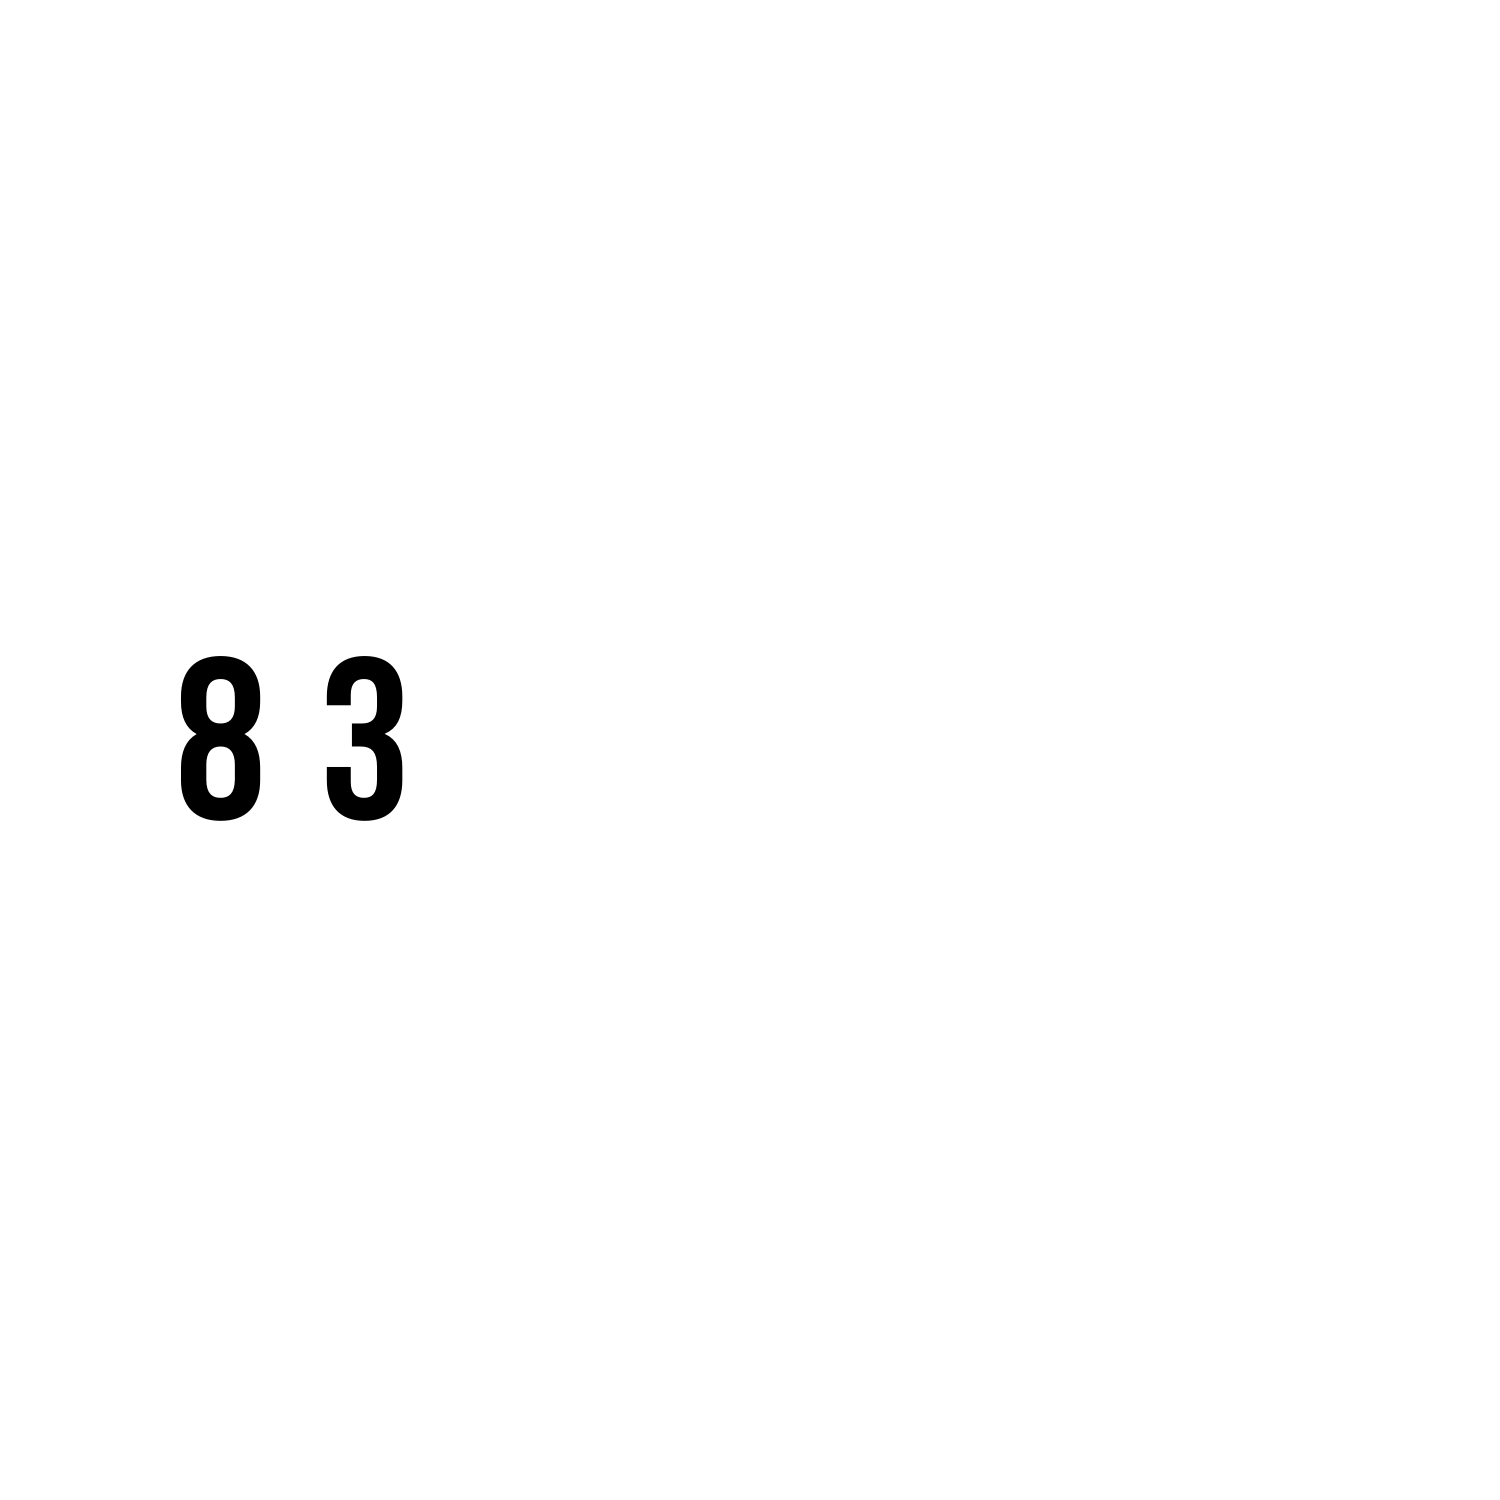 83 Studios LLC